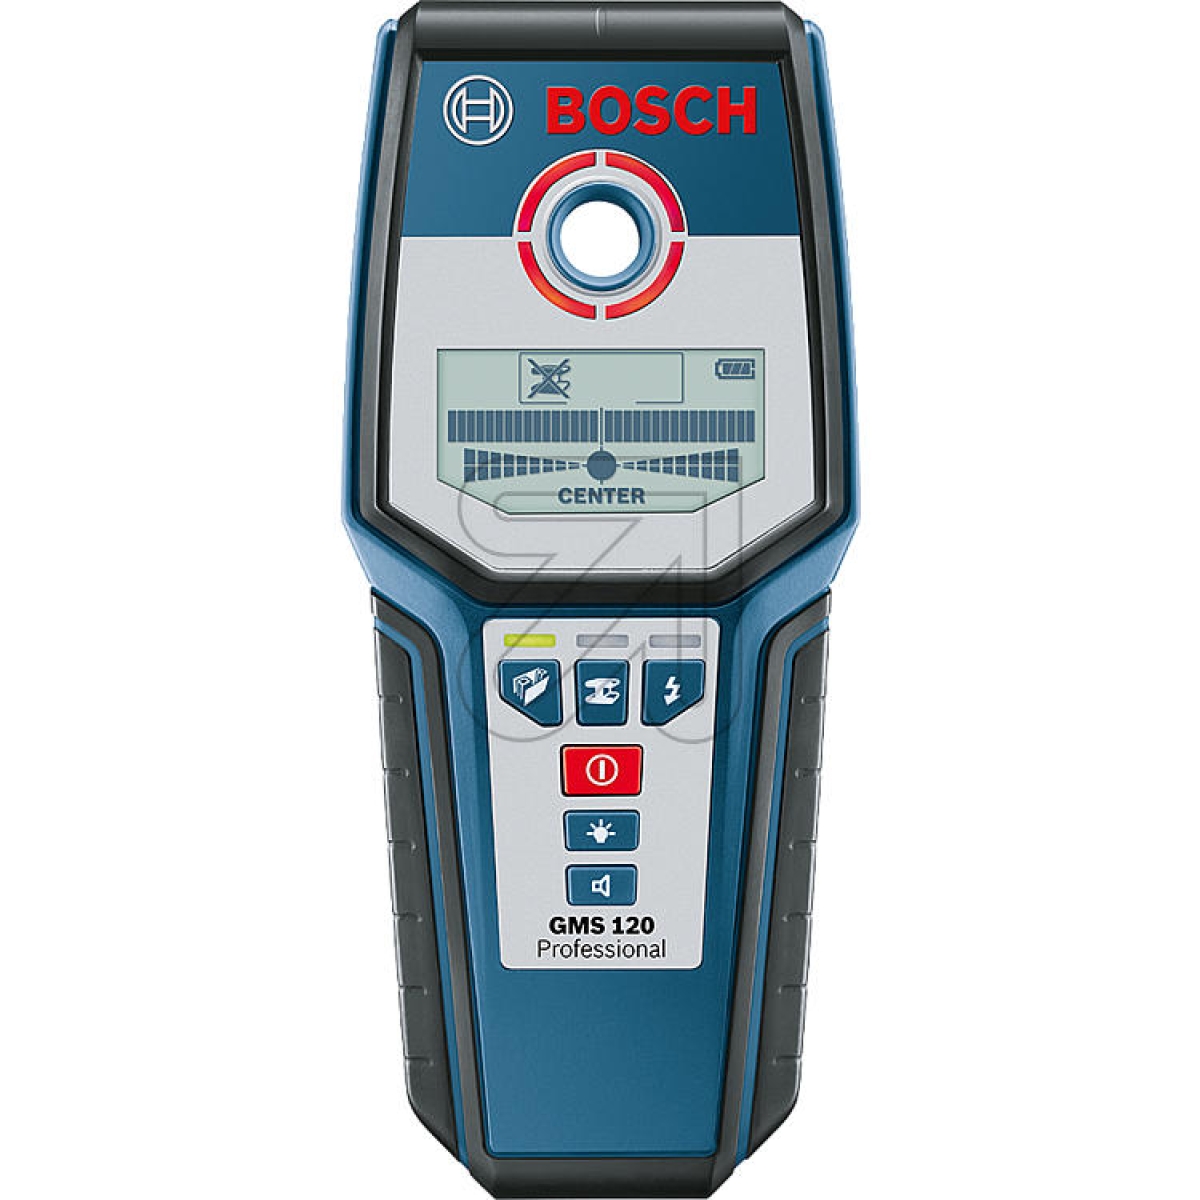 BoschGMS 120 Multi-Locating Device